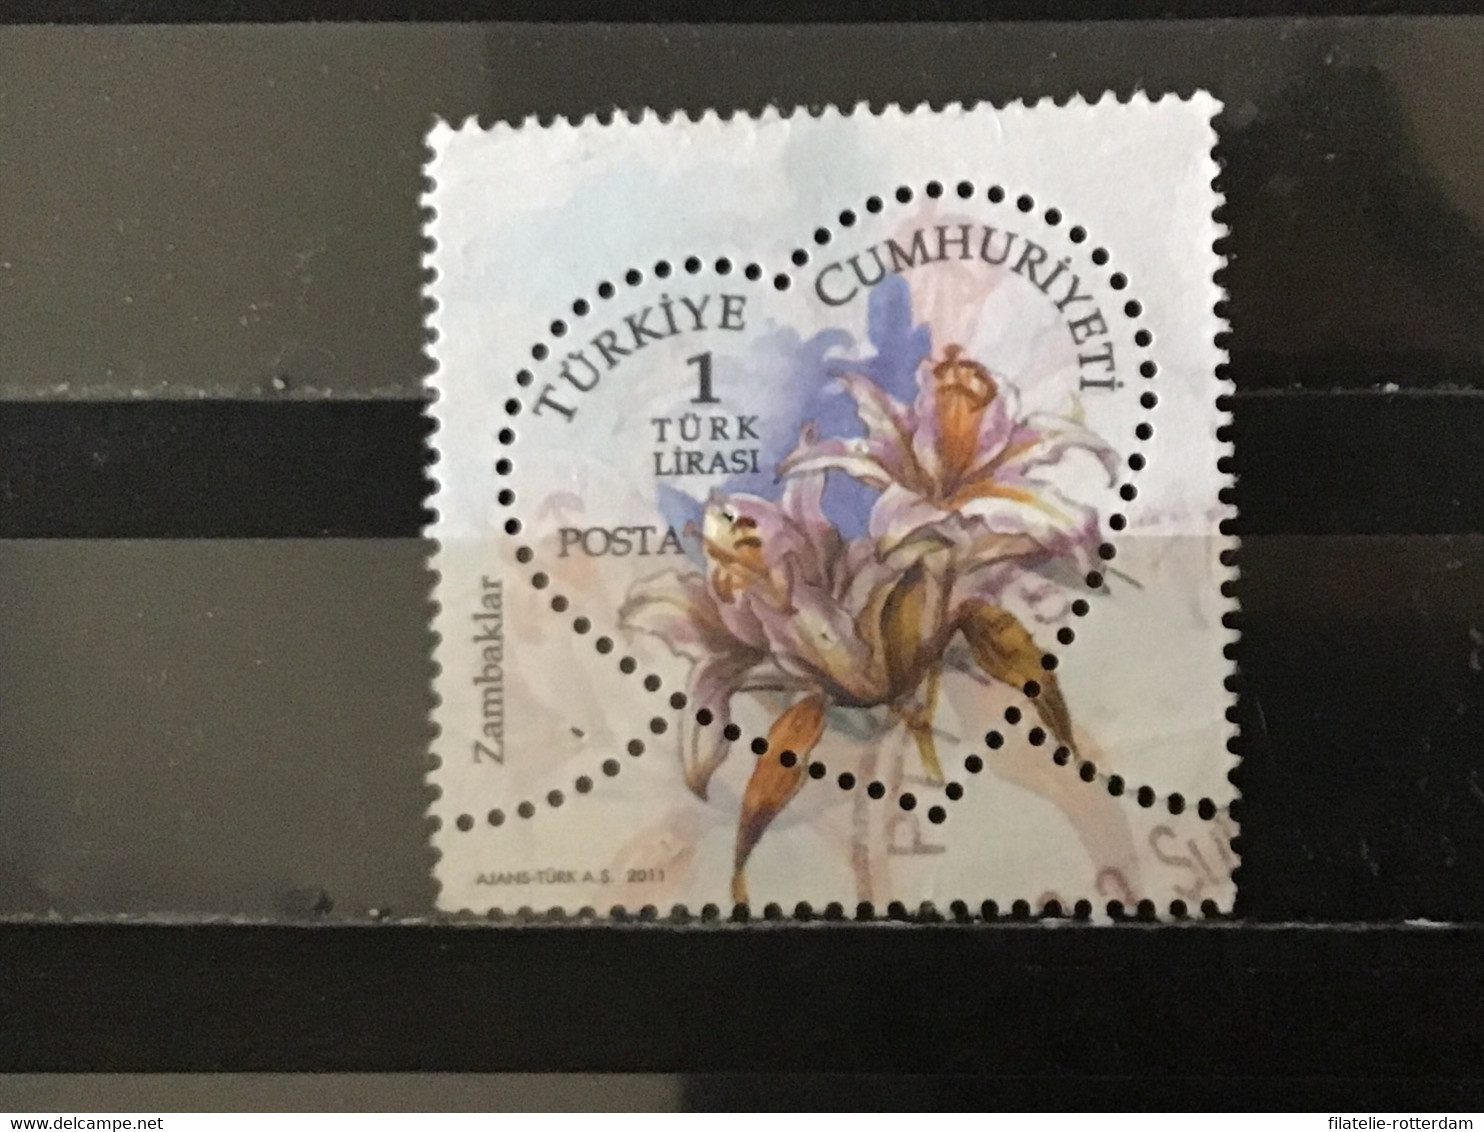 Turkije / Turkey - Lelies (1) 2011 - Used Stamps